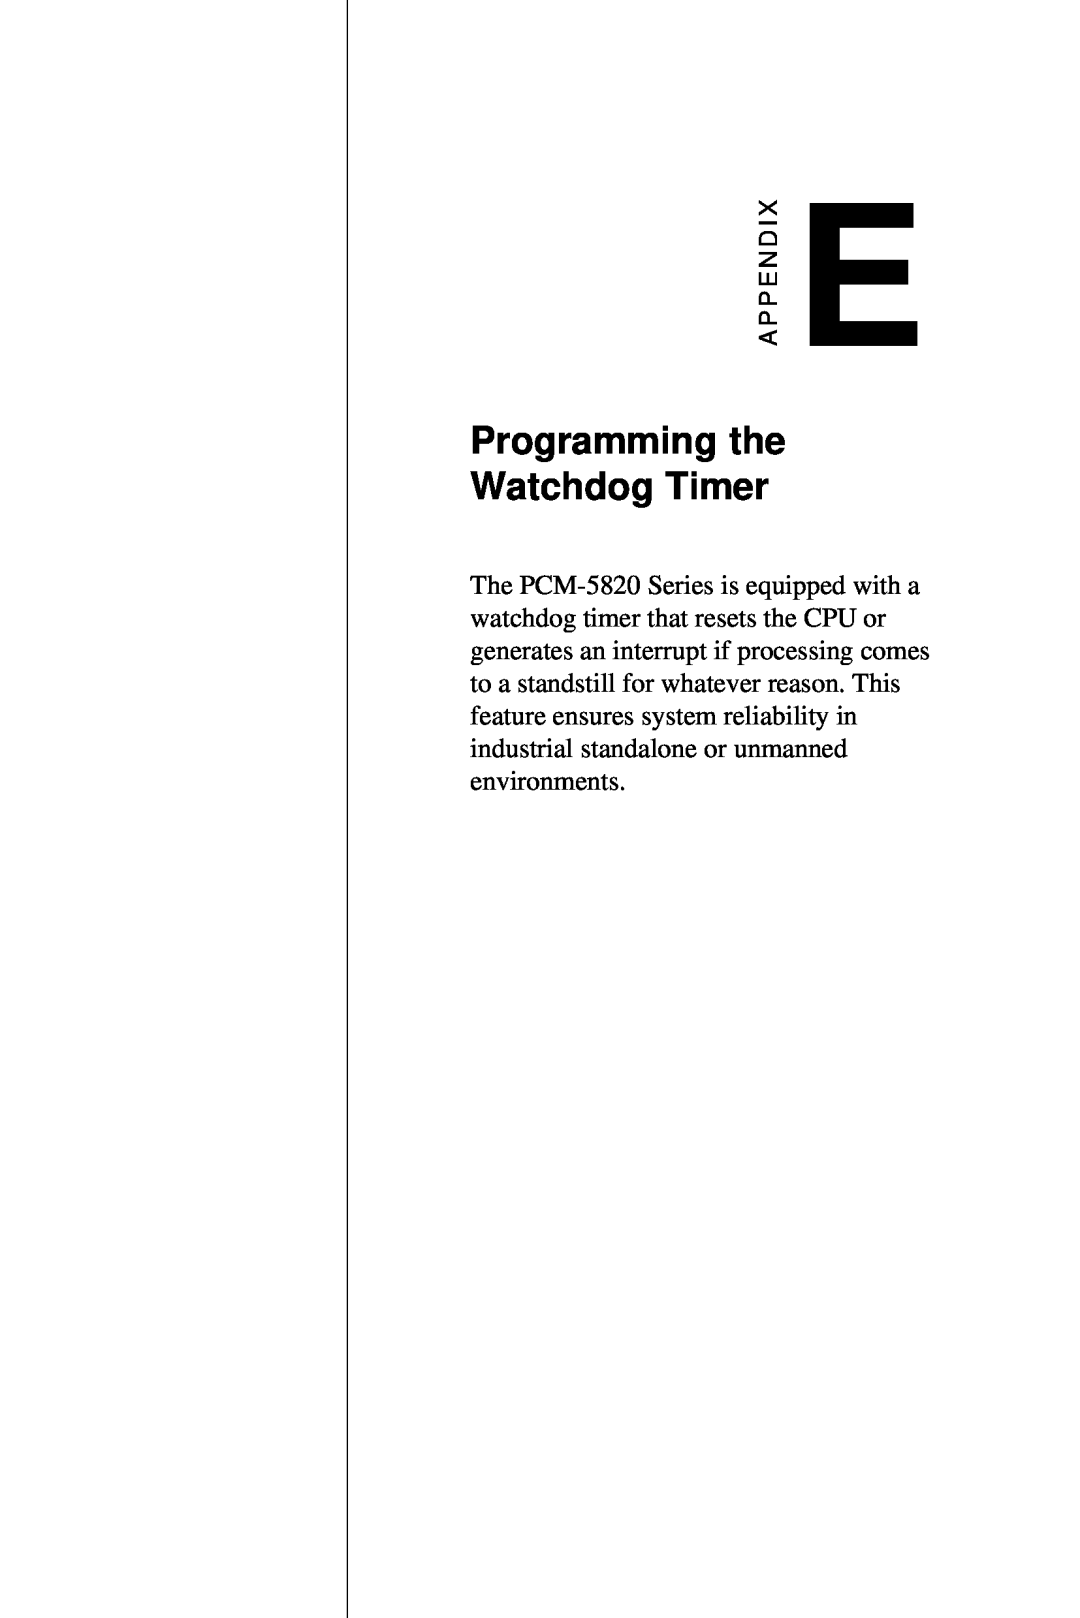 AMD PCM-5820 manual Programming the Watchdog Timer 